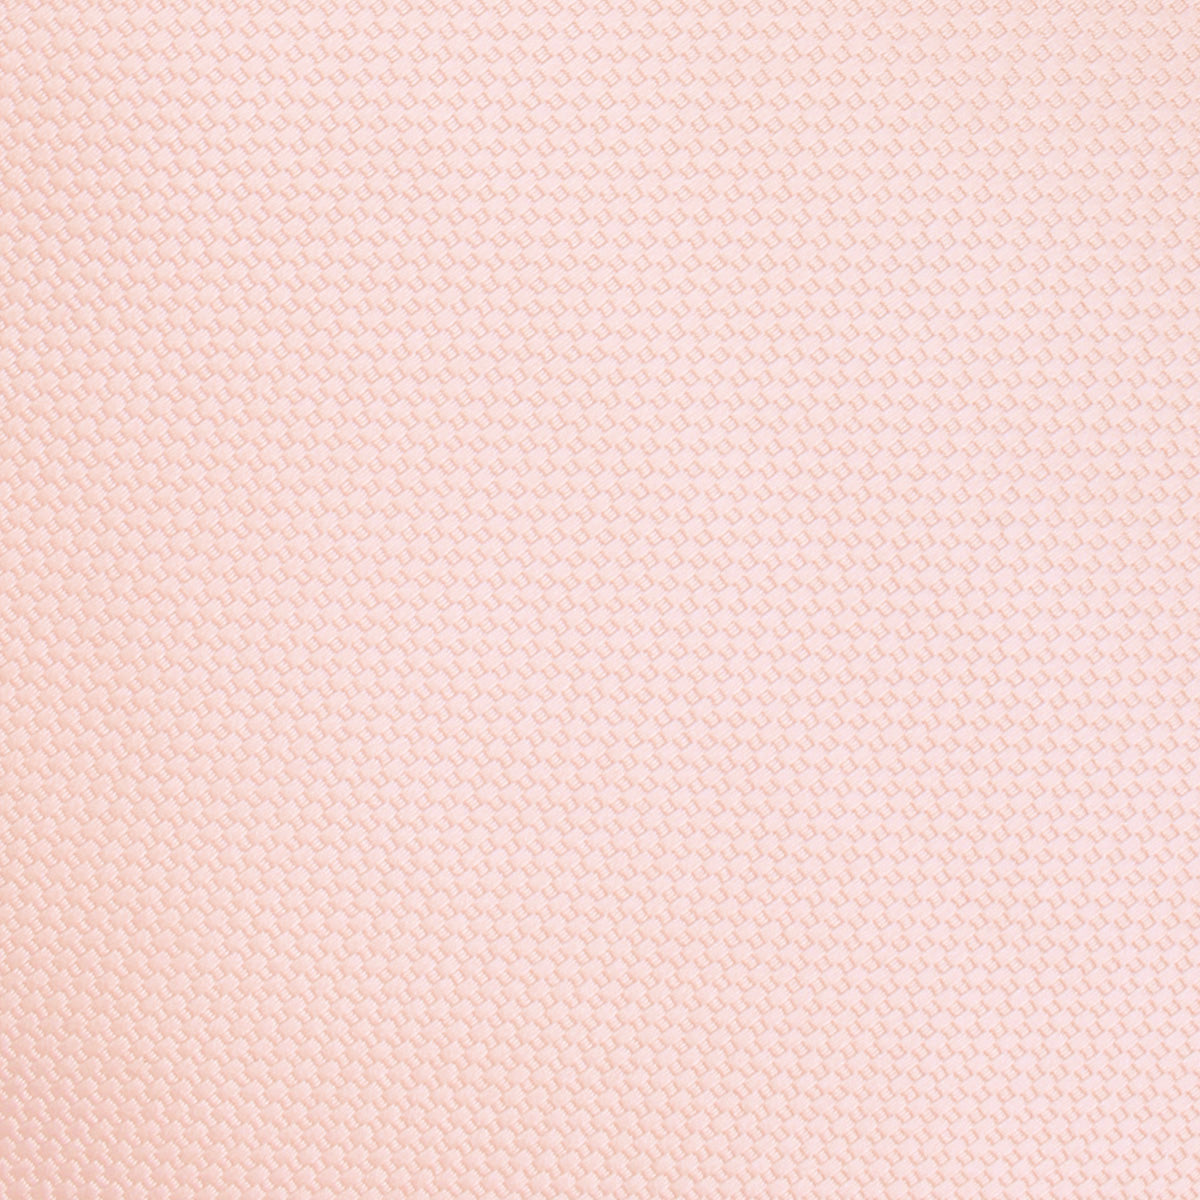 Blush Pink Basket Weave Fabric Swatch